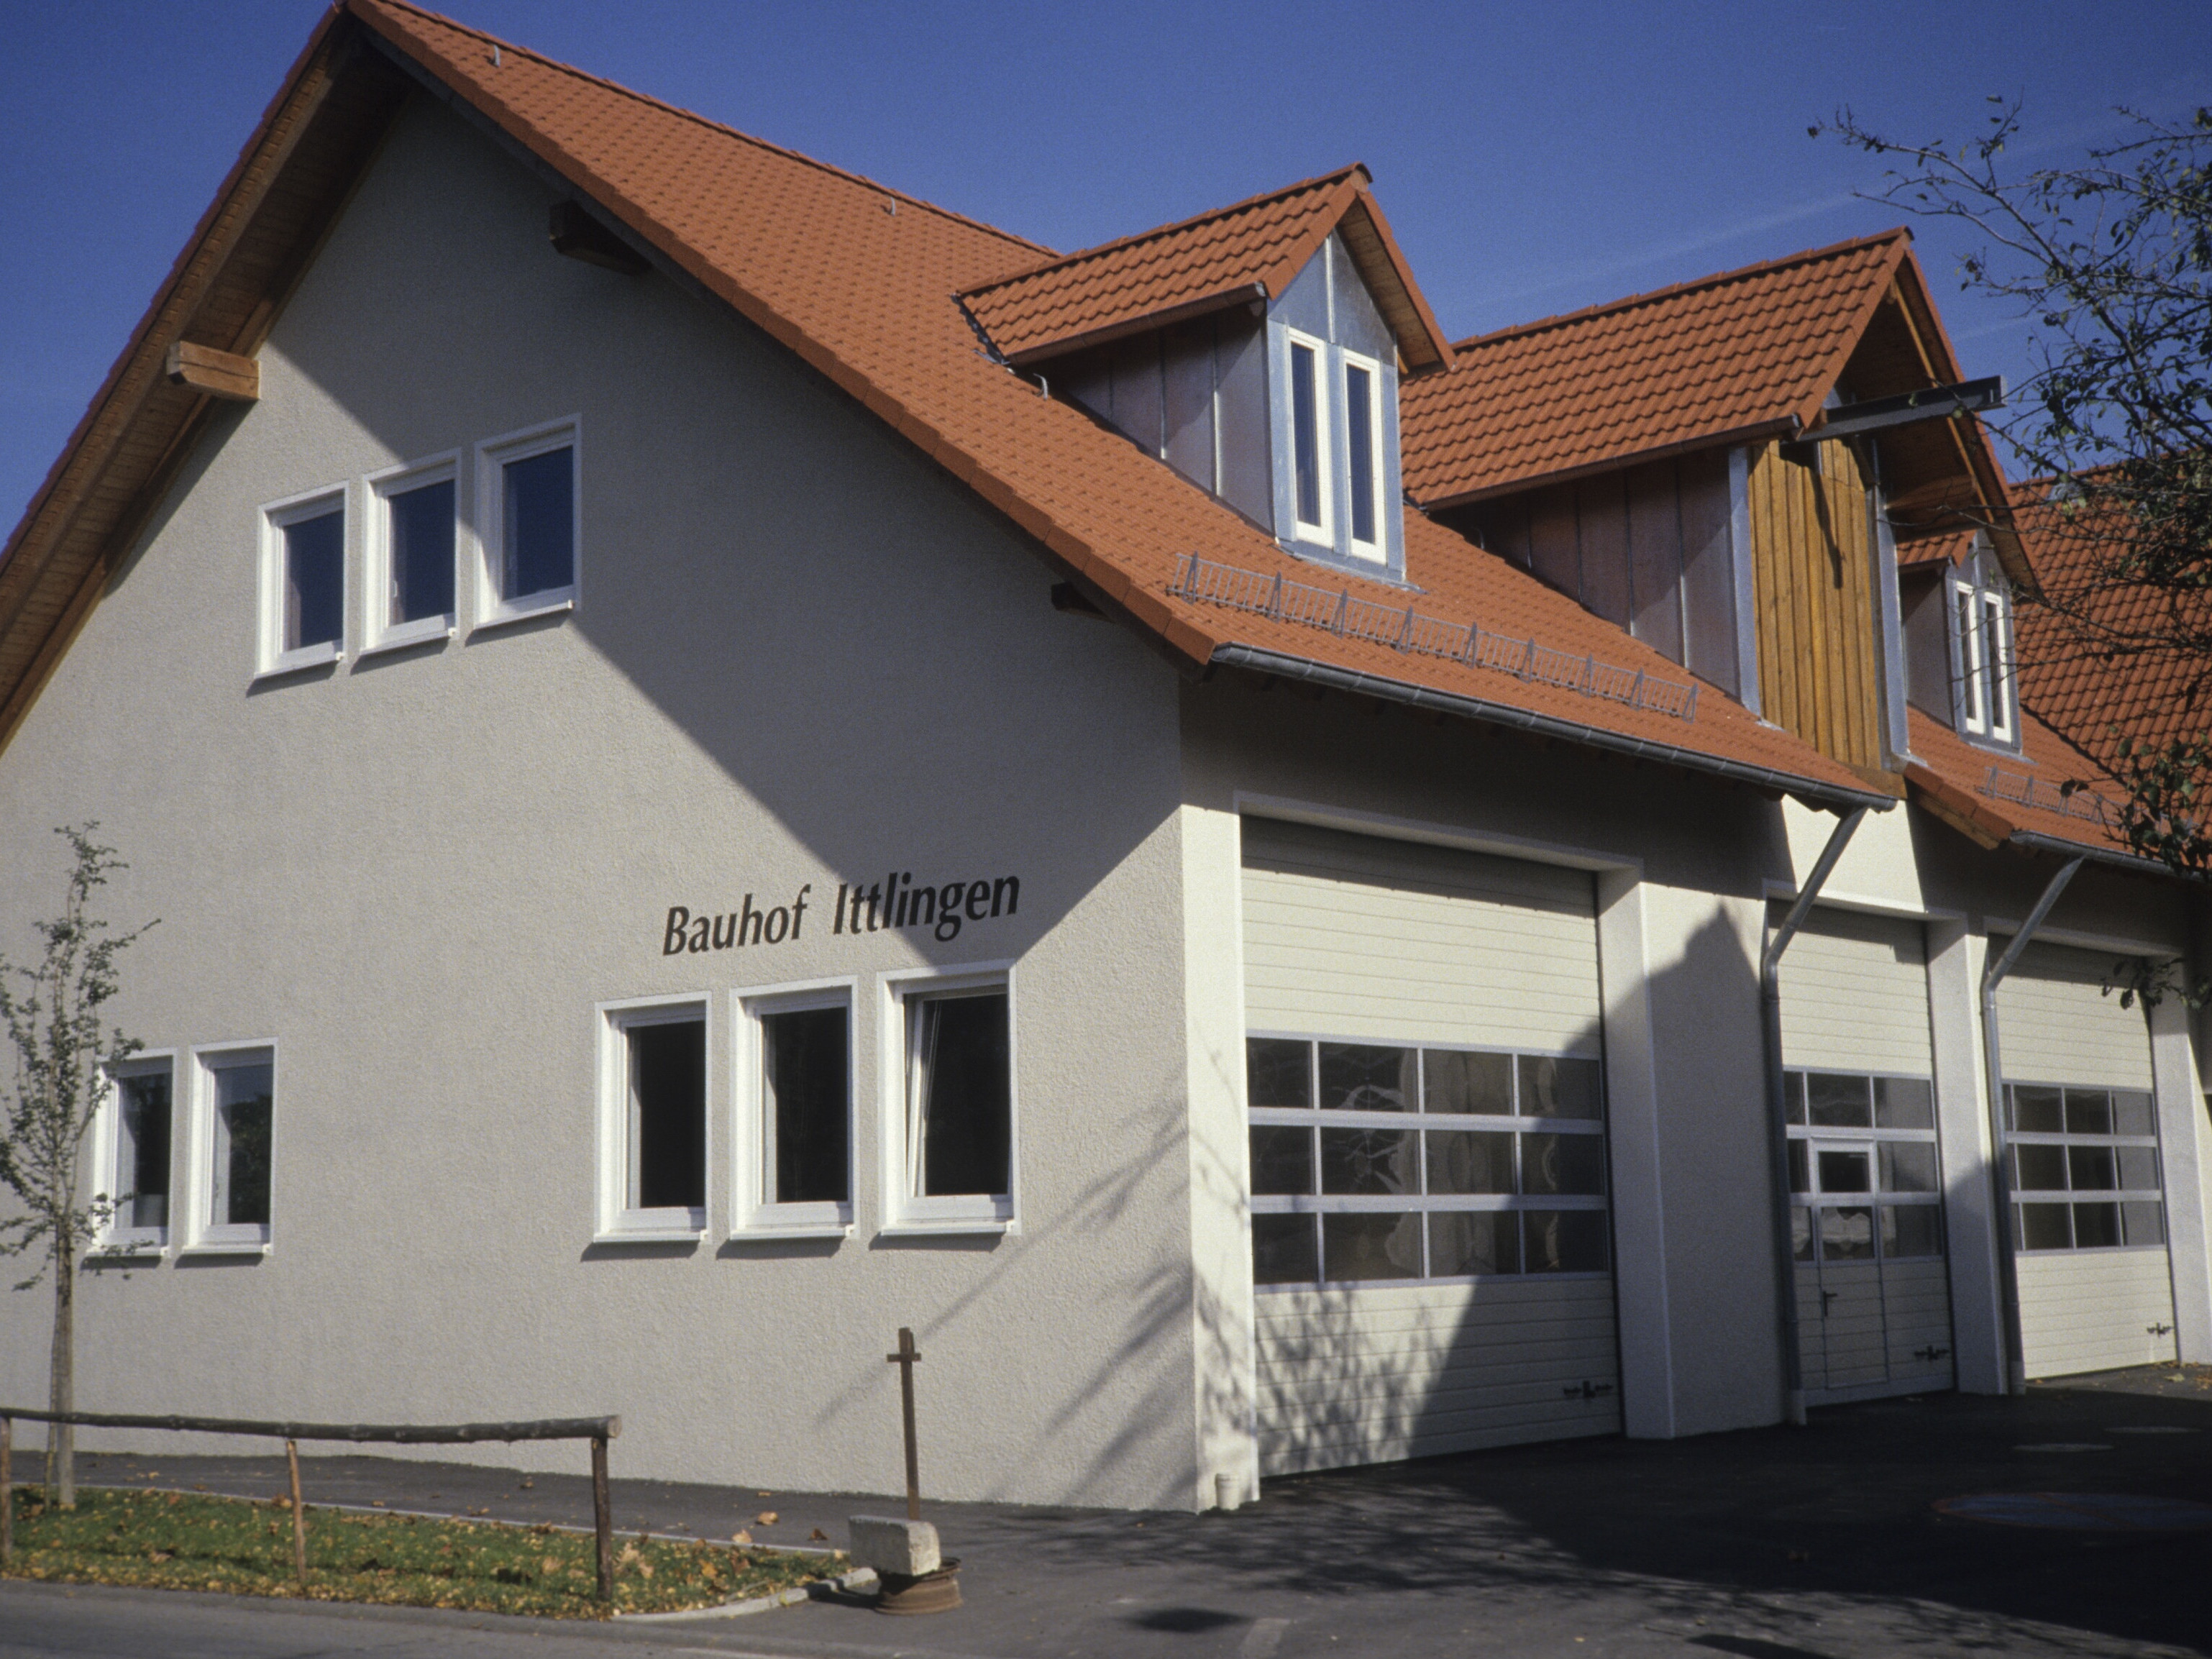  Bauhof Ittlingen 